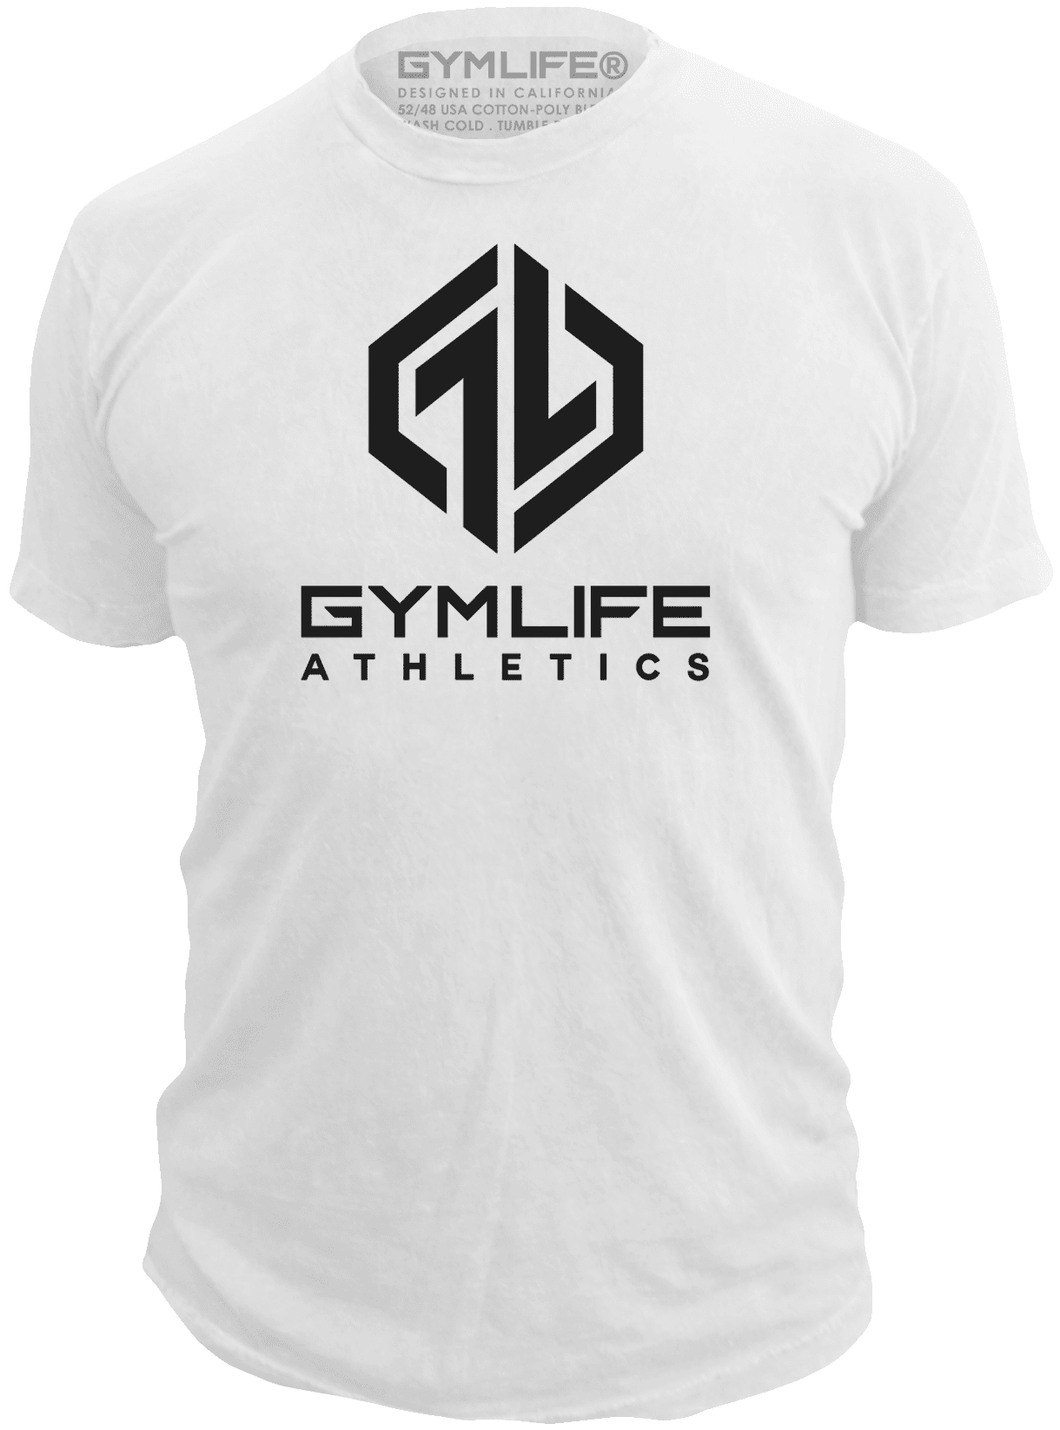 GYM LIFE - Nitron - Mens Athletic 52/48 Perfromance Workout T-Shirt, White